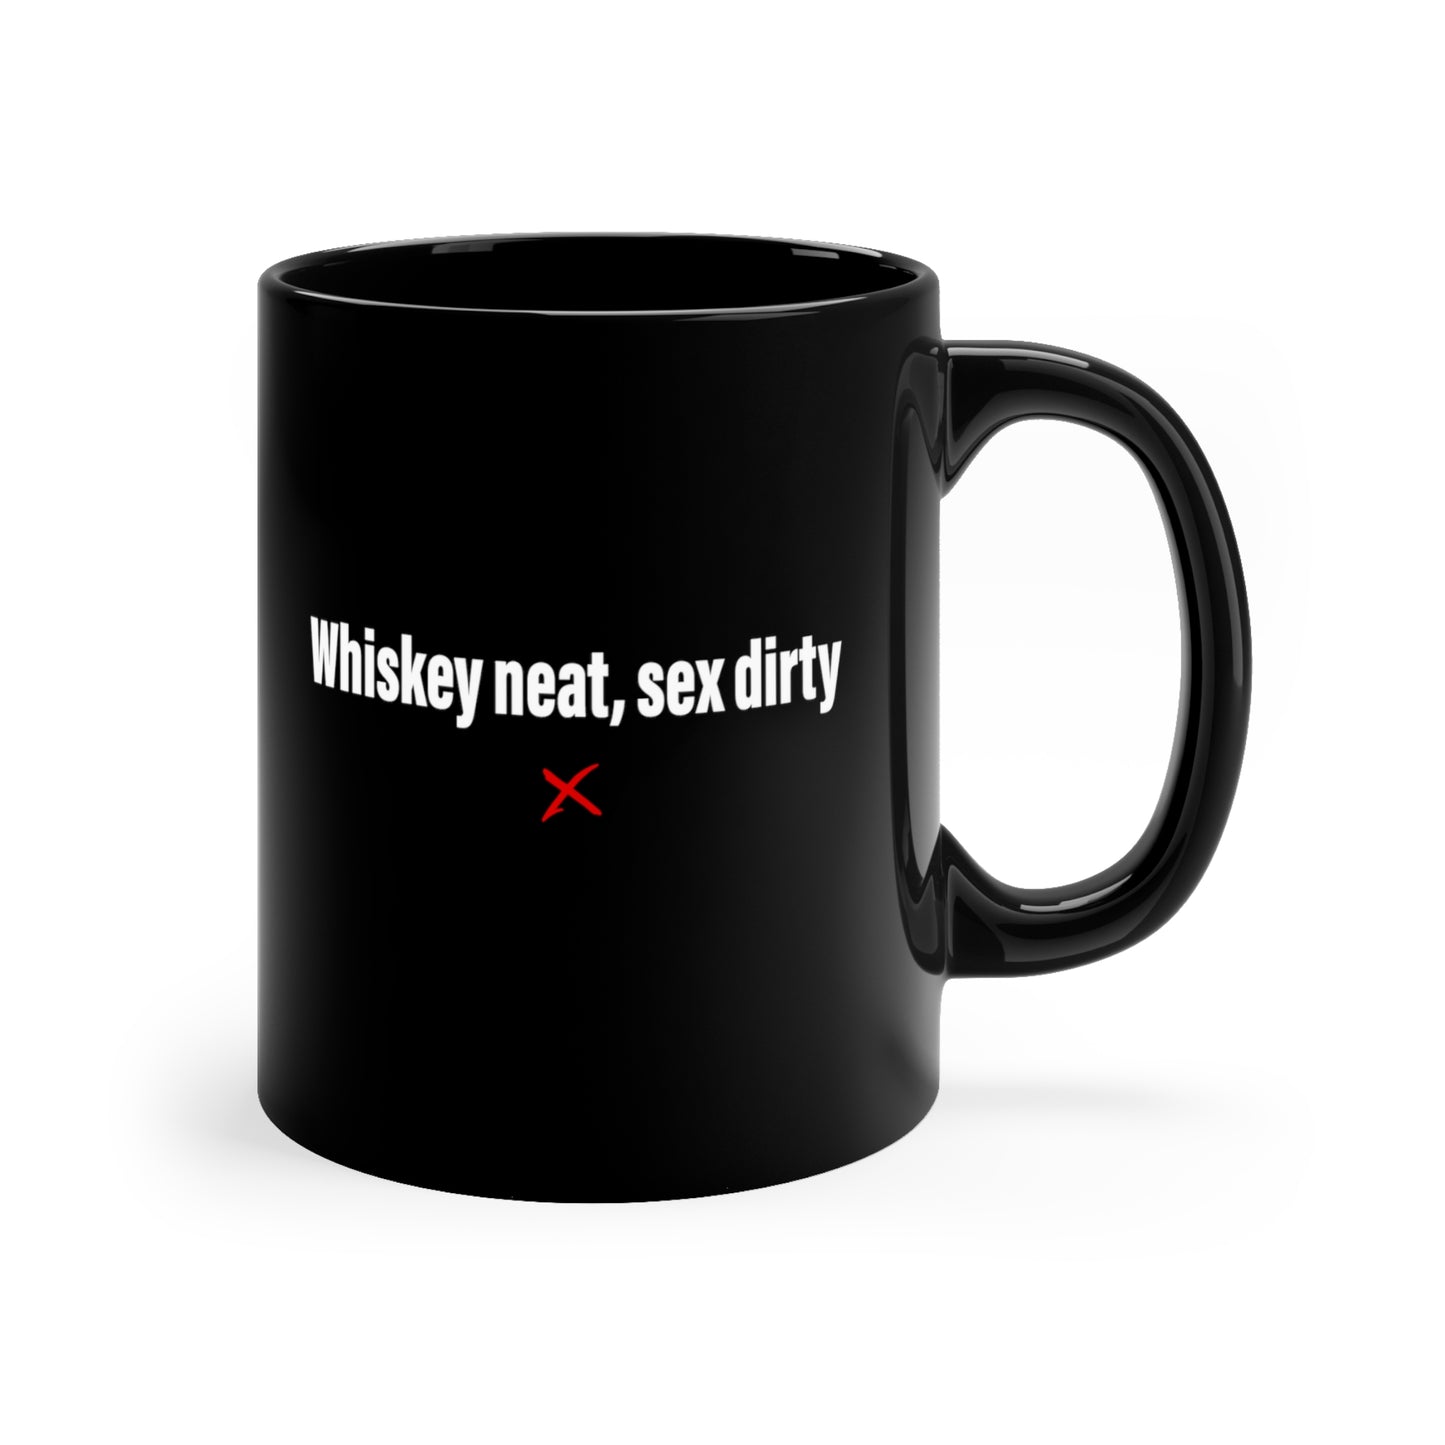 Whiskey neat, sex dirty - Mug